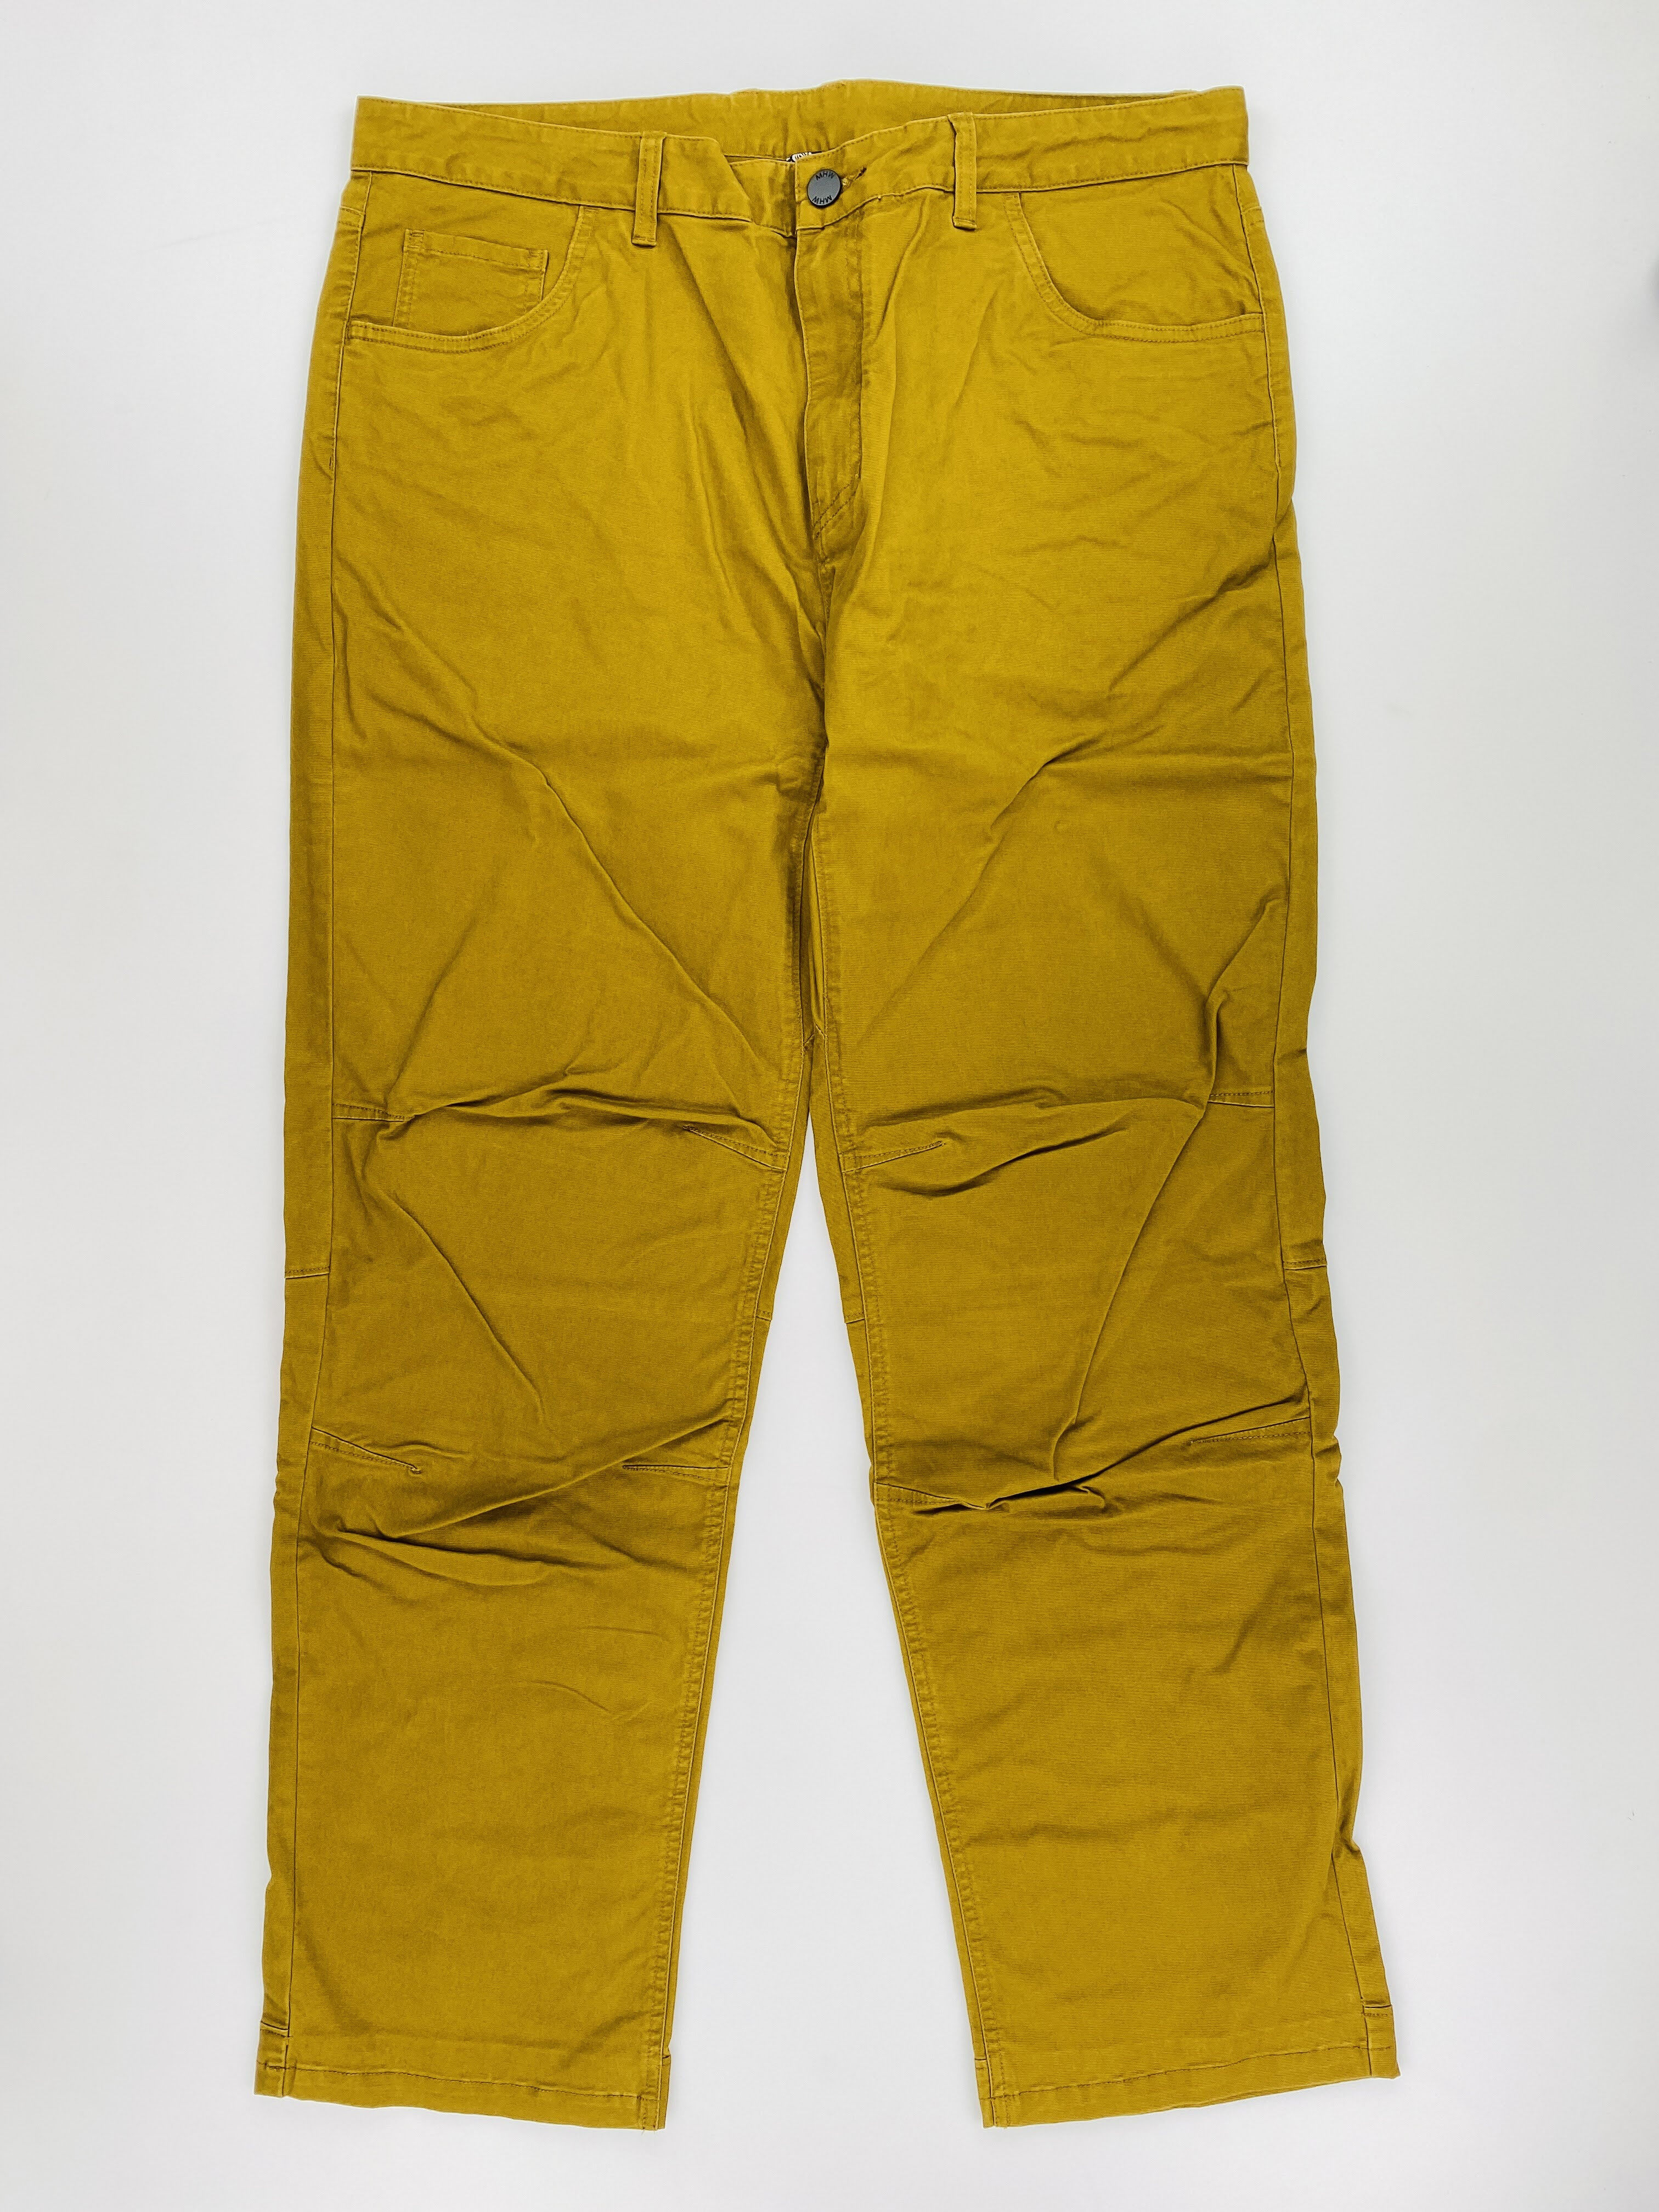 Mountain Hardwear Cederberg Man Pant Regular - Seconde main Pantalon homme - Marron - US 38 | Hardloop